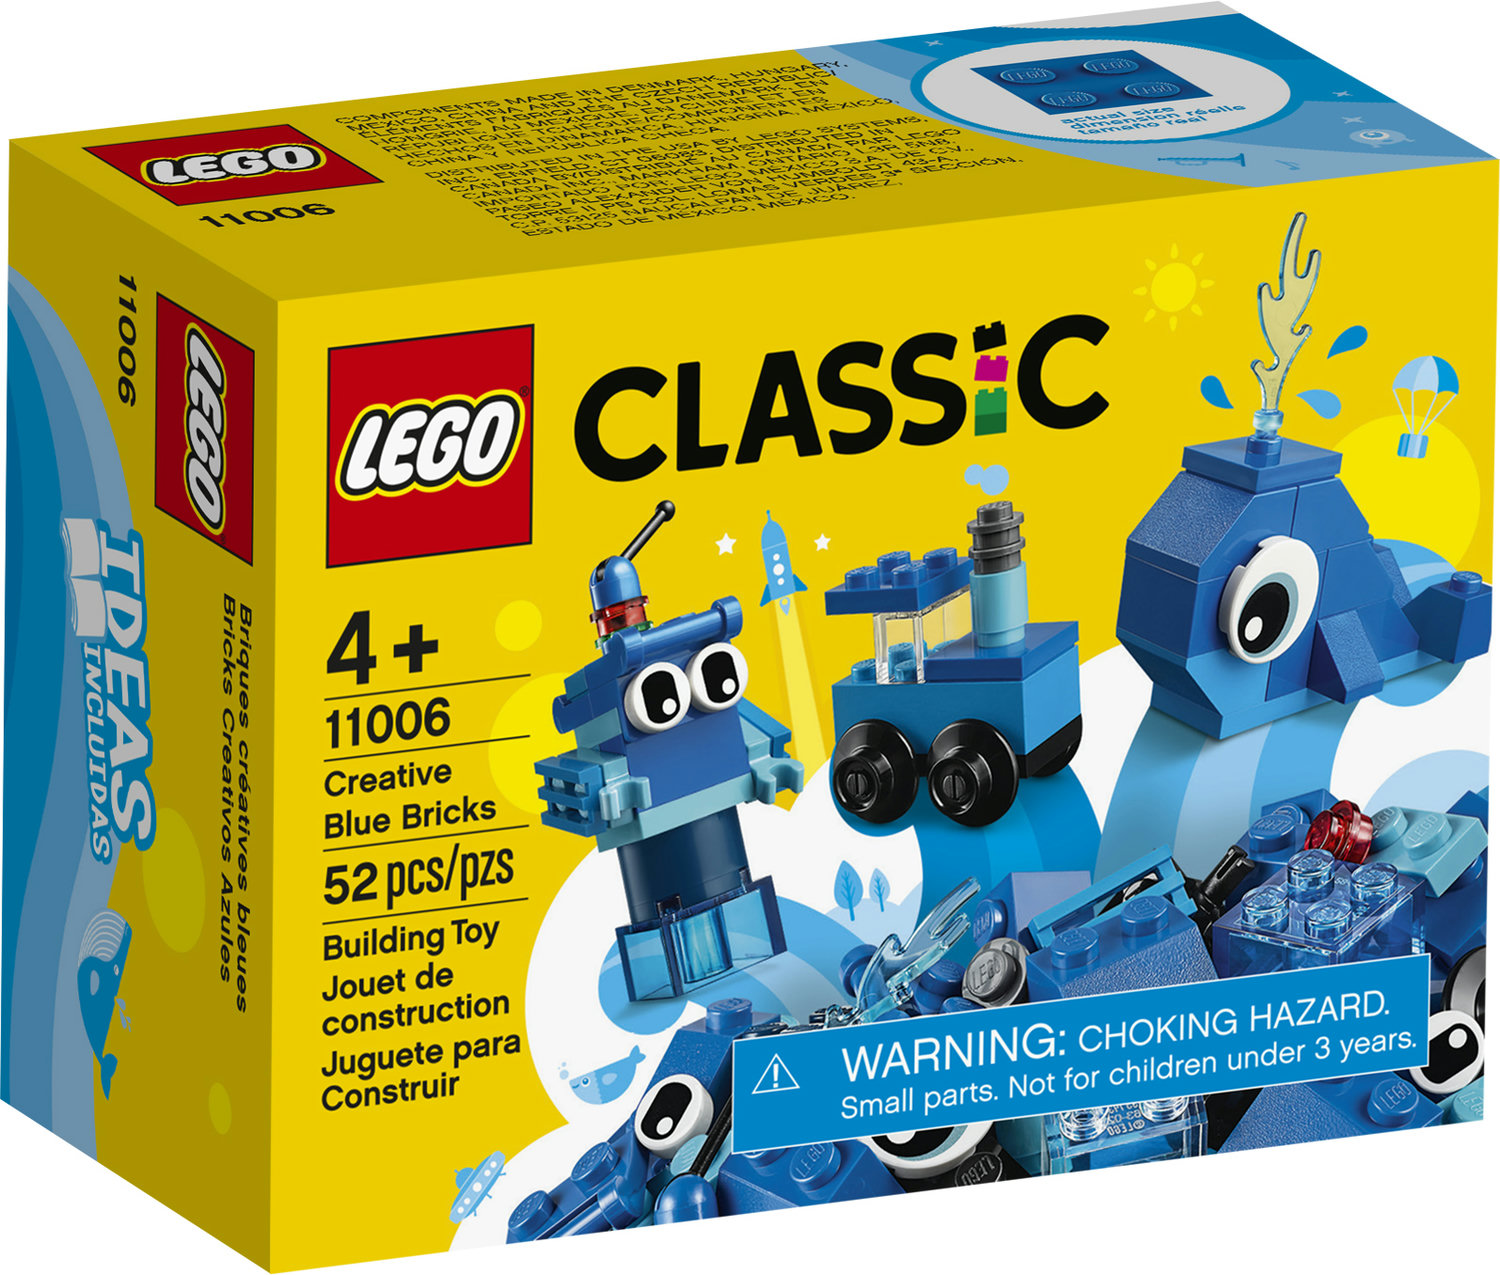 LEGO Classic Creative Blue Bricks 11006 Building Set for Imaginative Play (52 Pieces) - image 5 of 5